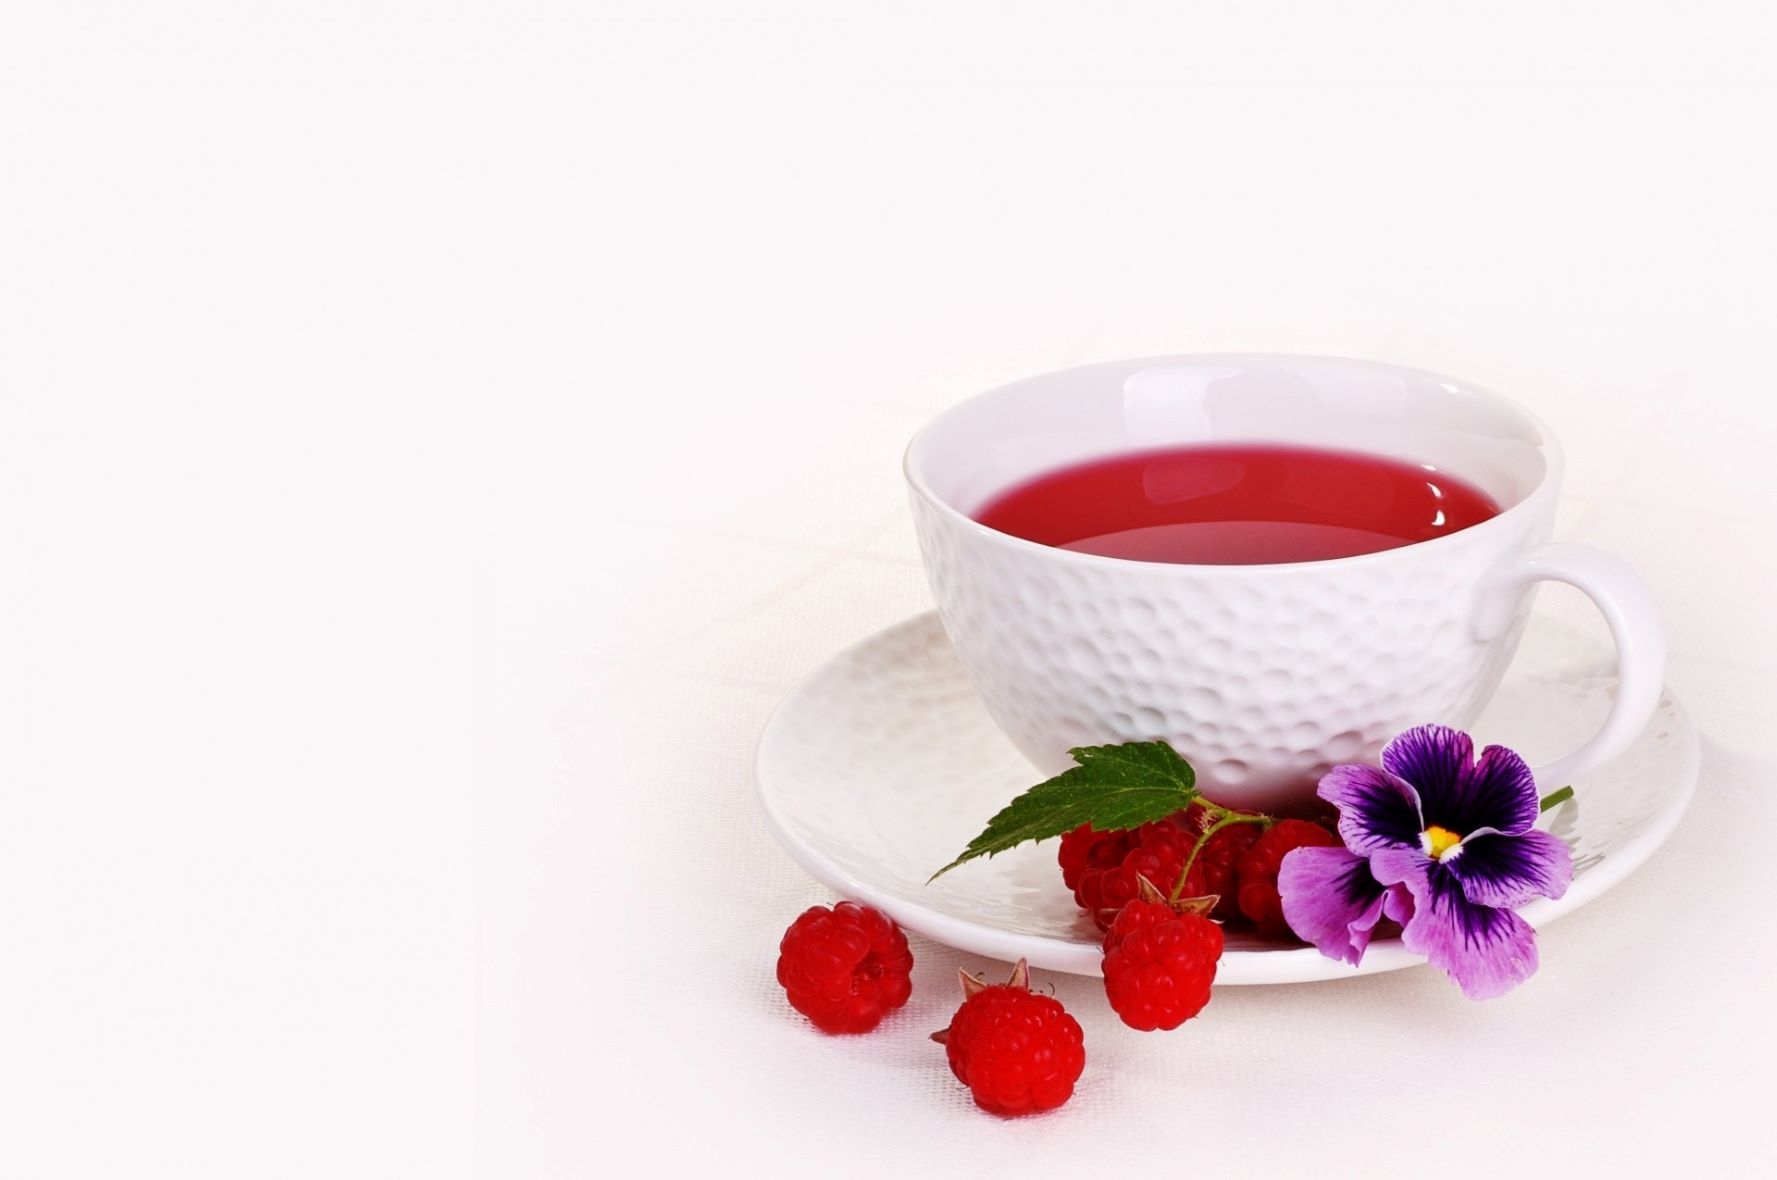 Pixabay. Tisana de frutos rojos. Pexel